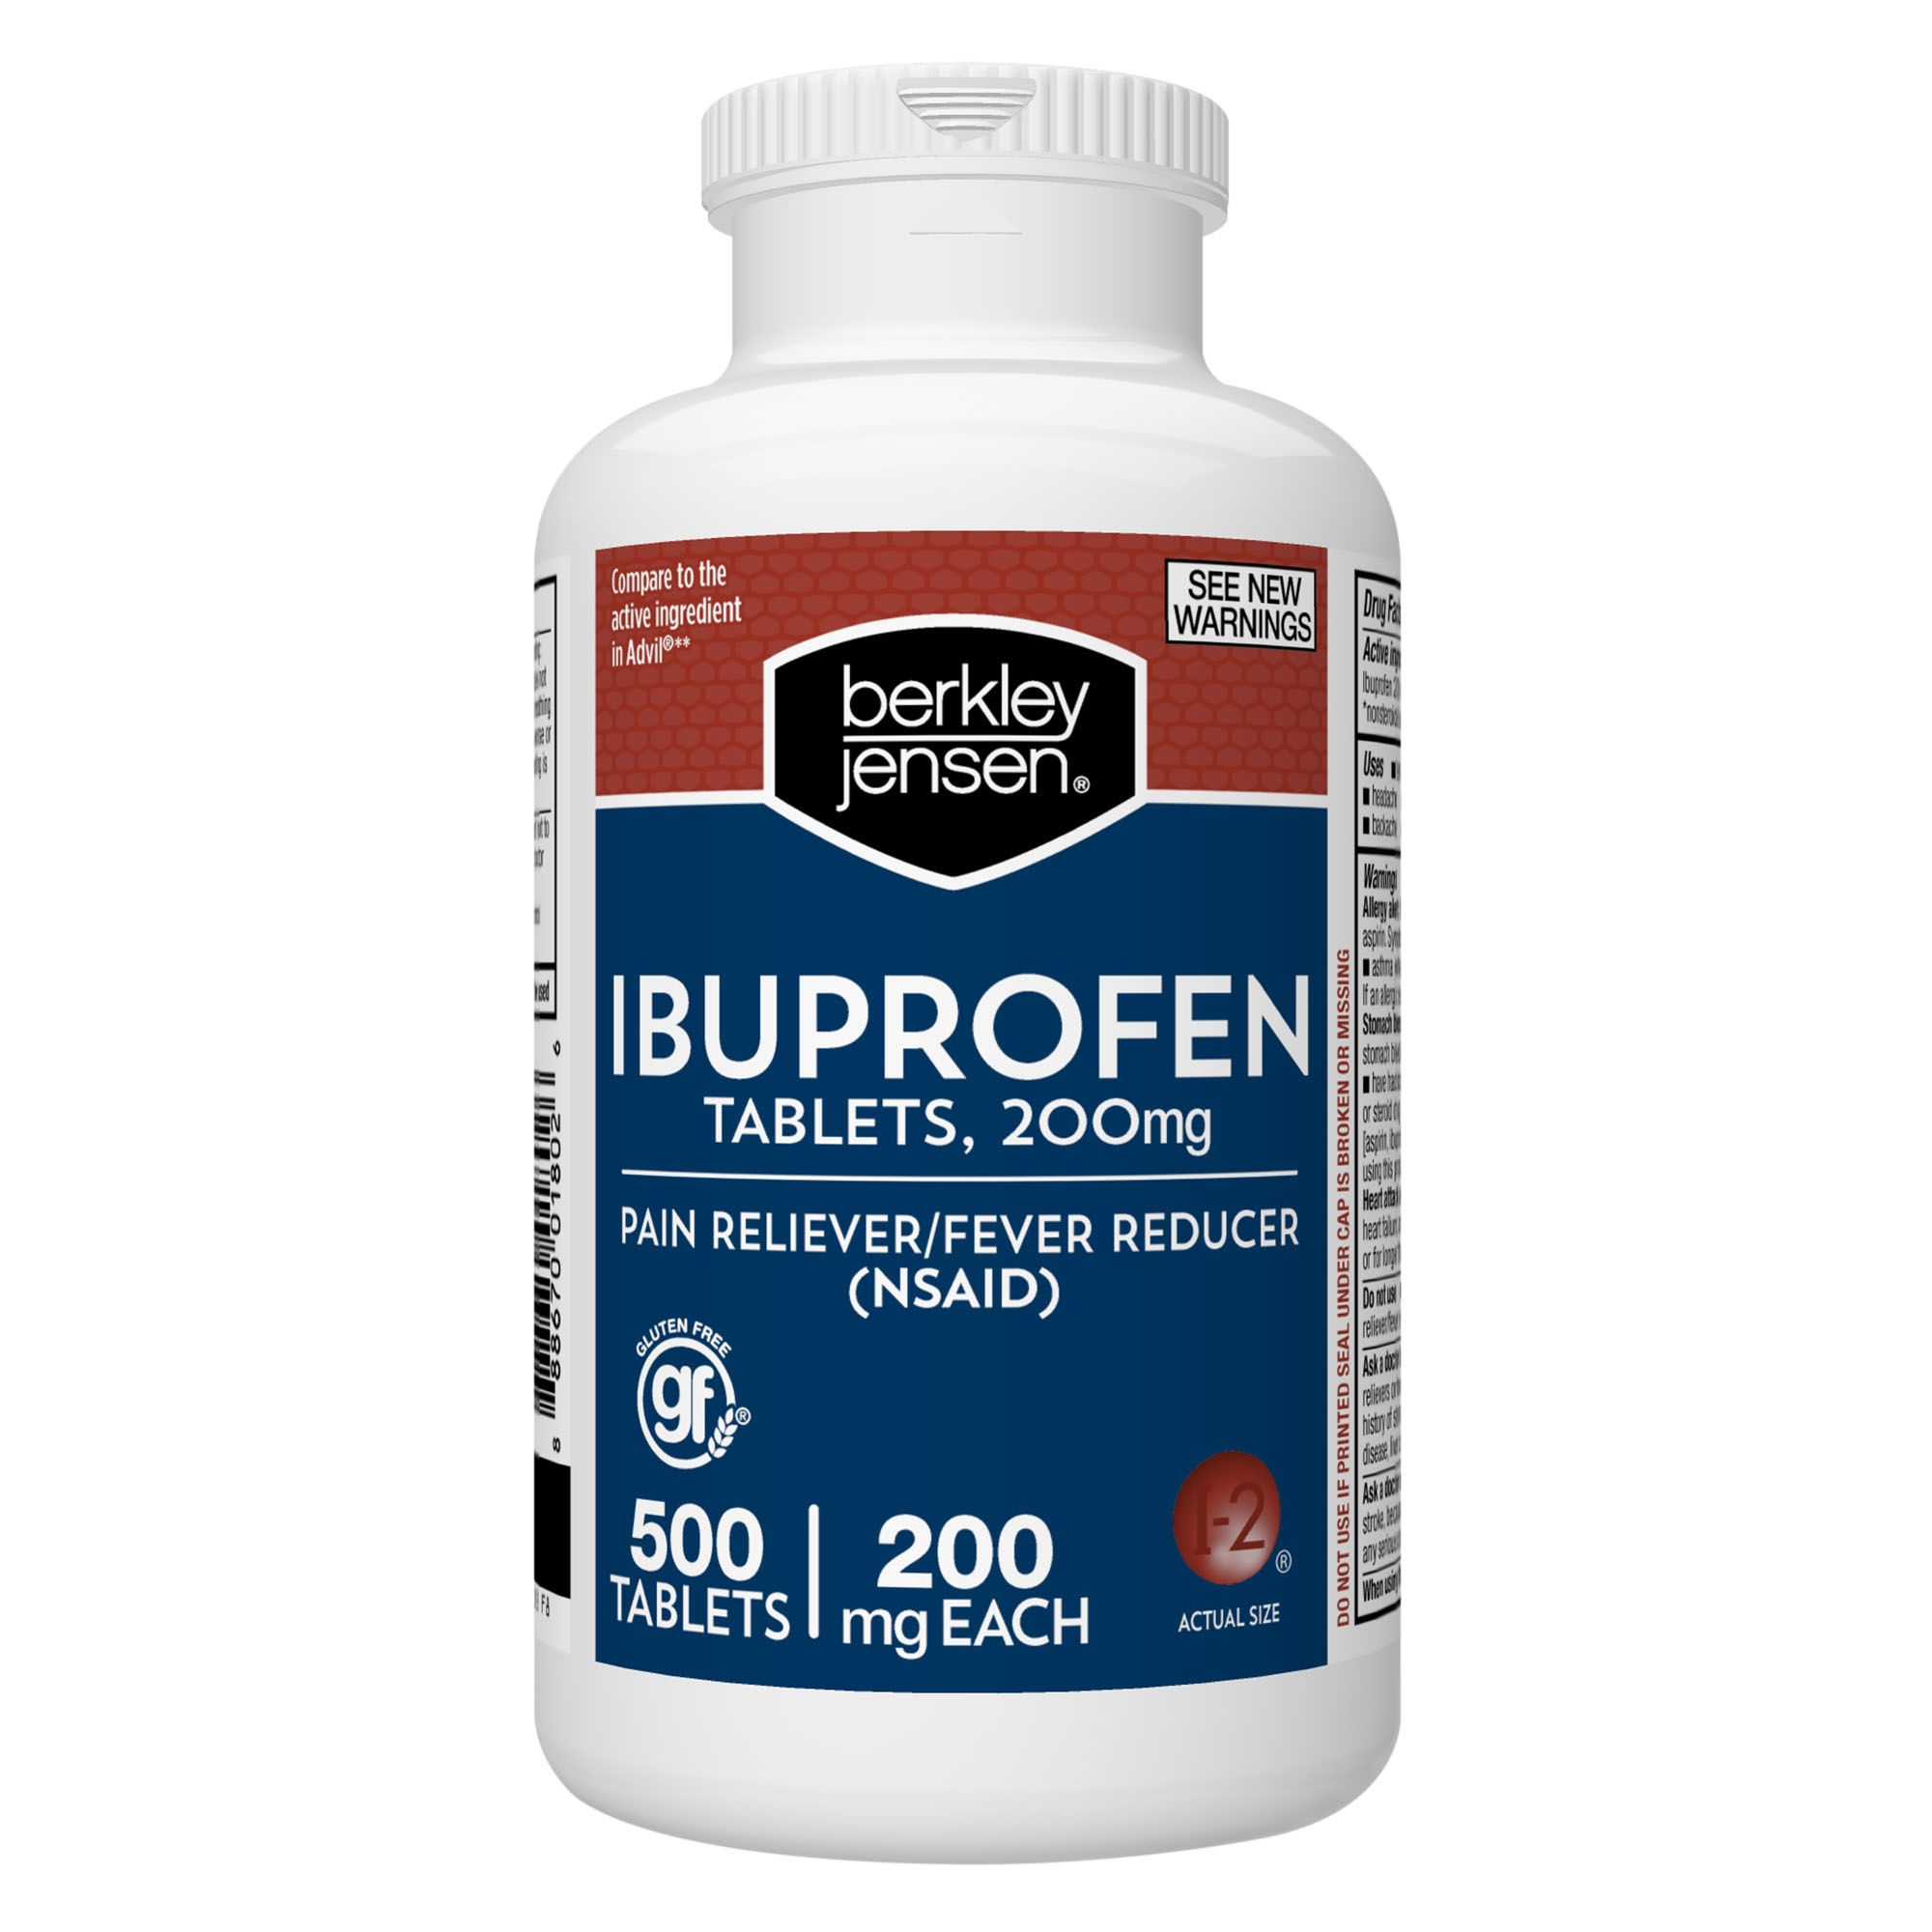 Berkley Jensen 200mg Ibuprofen Tablets, 500 ct.